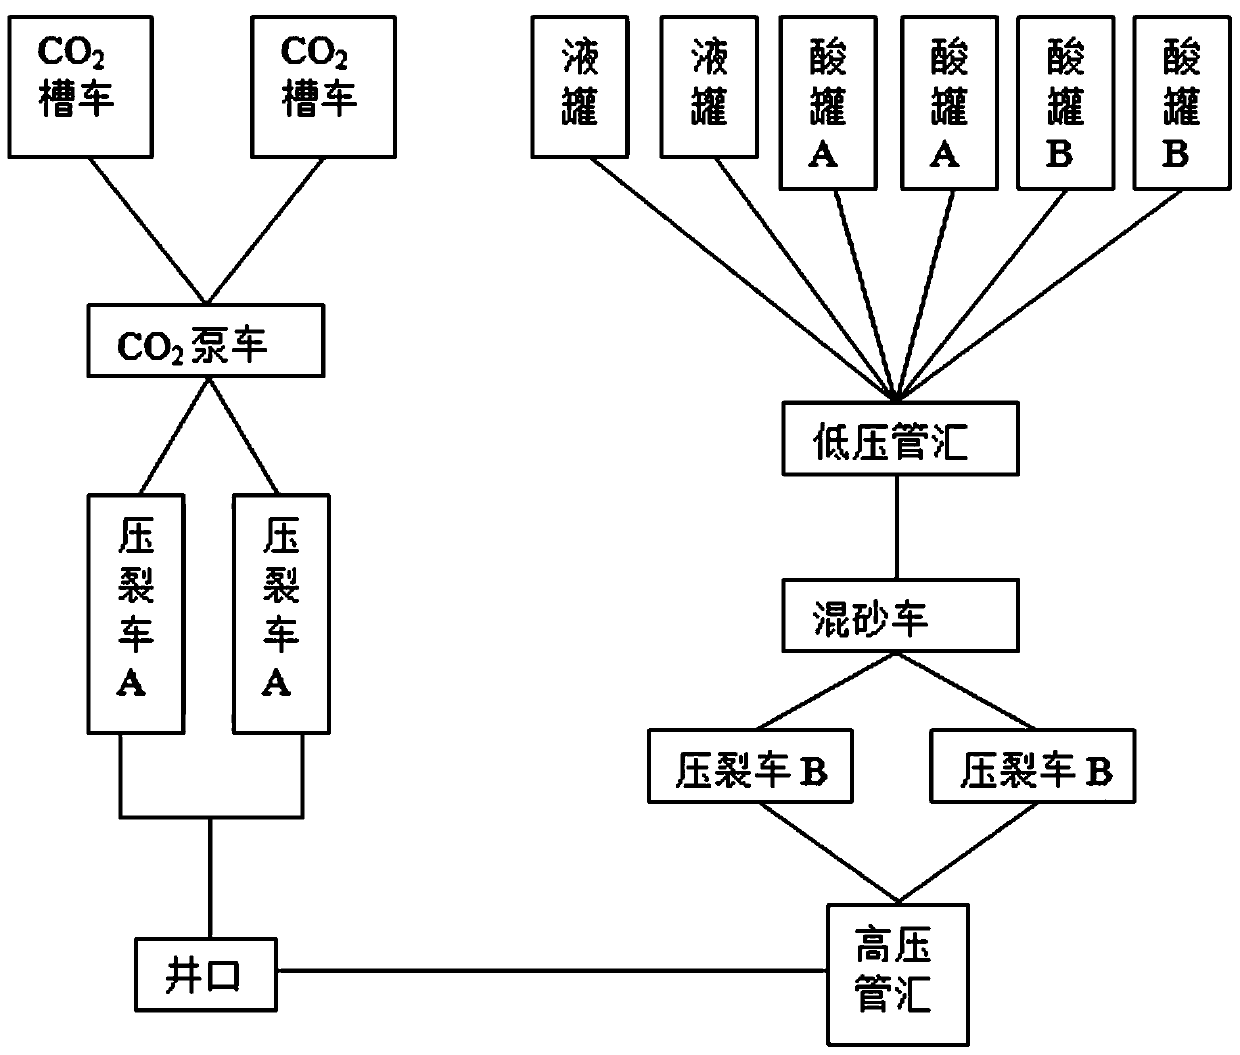 Carbon dioxide acid fracturing method for low permeability heterogeneous carbonate gas reservoir